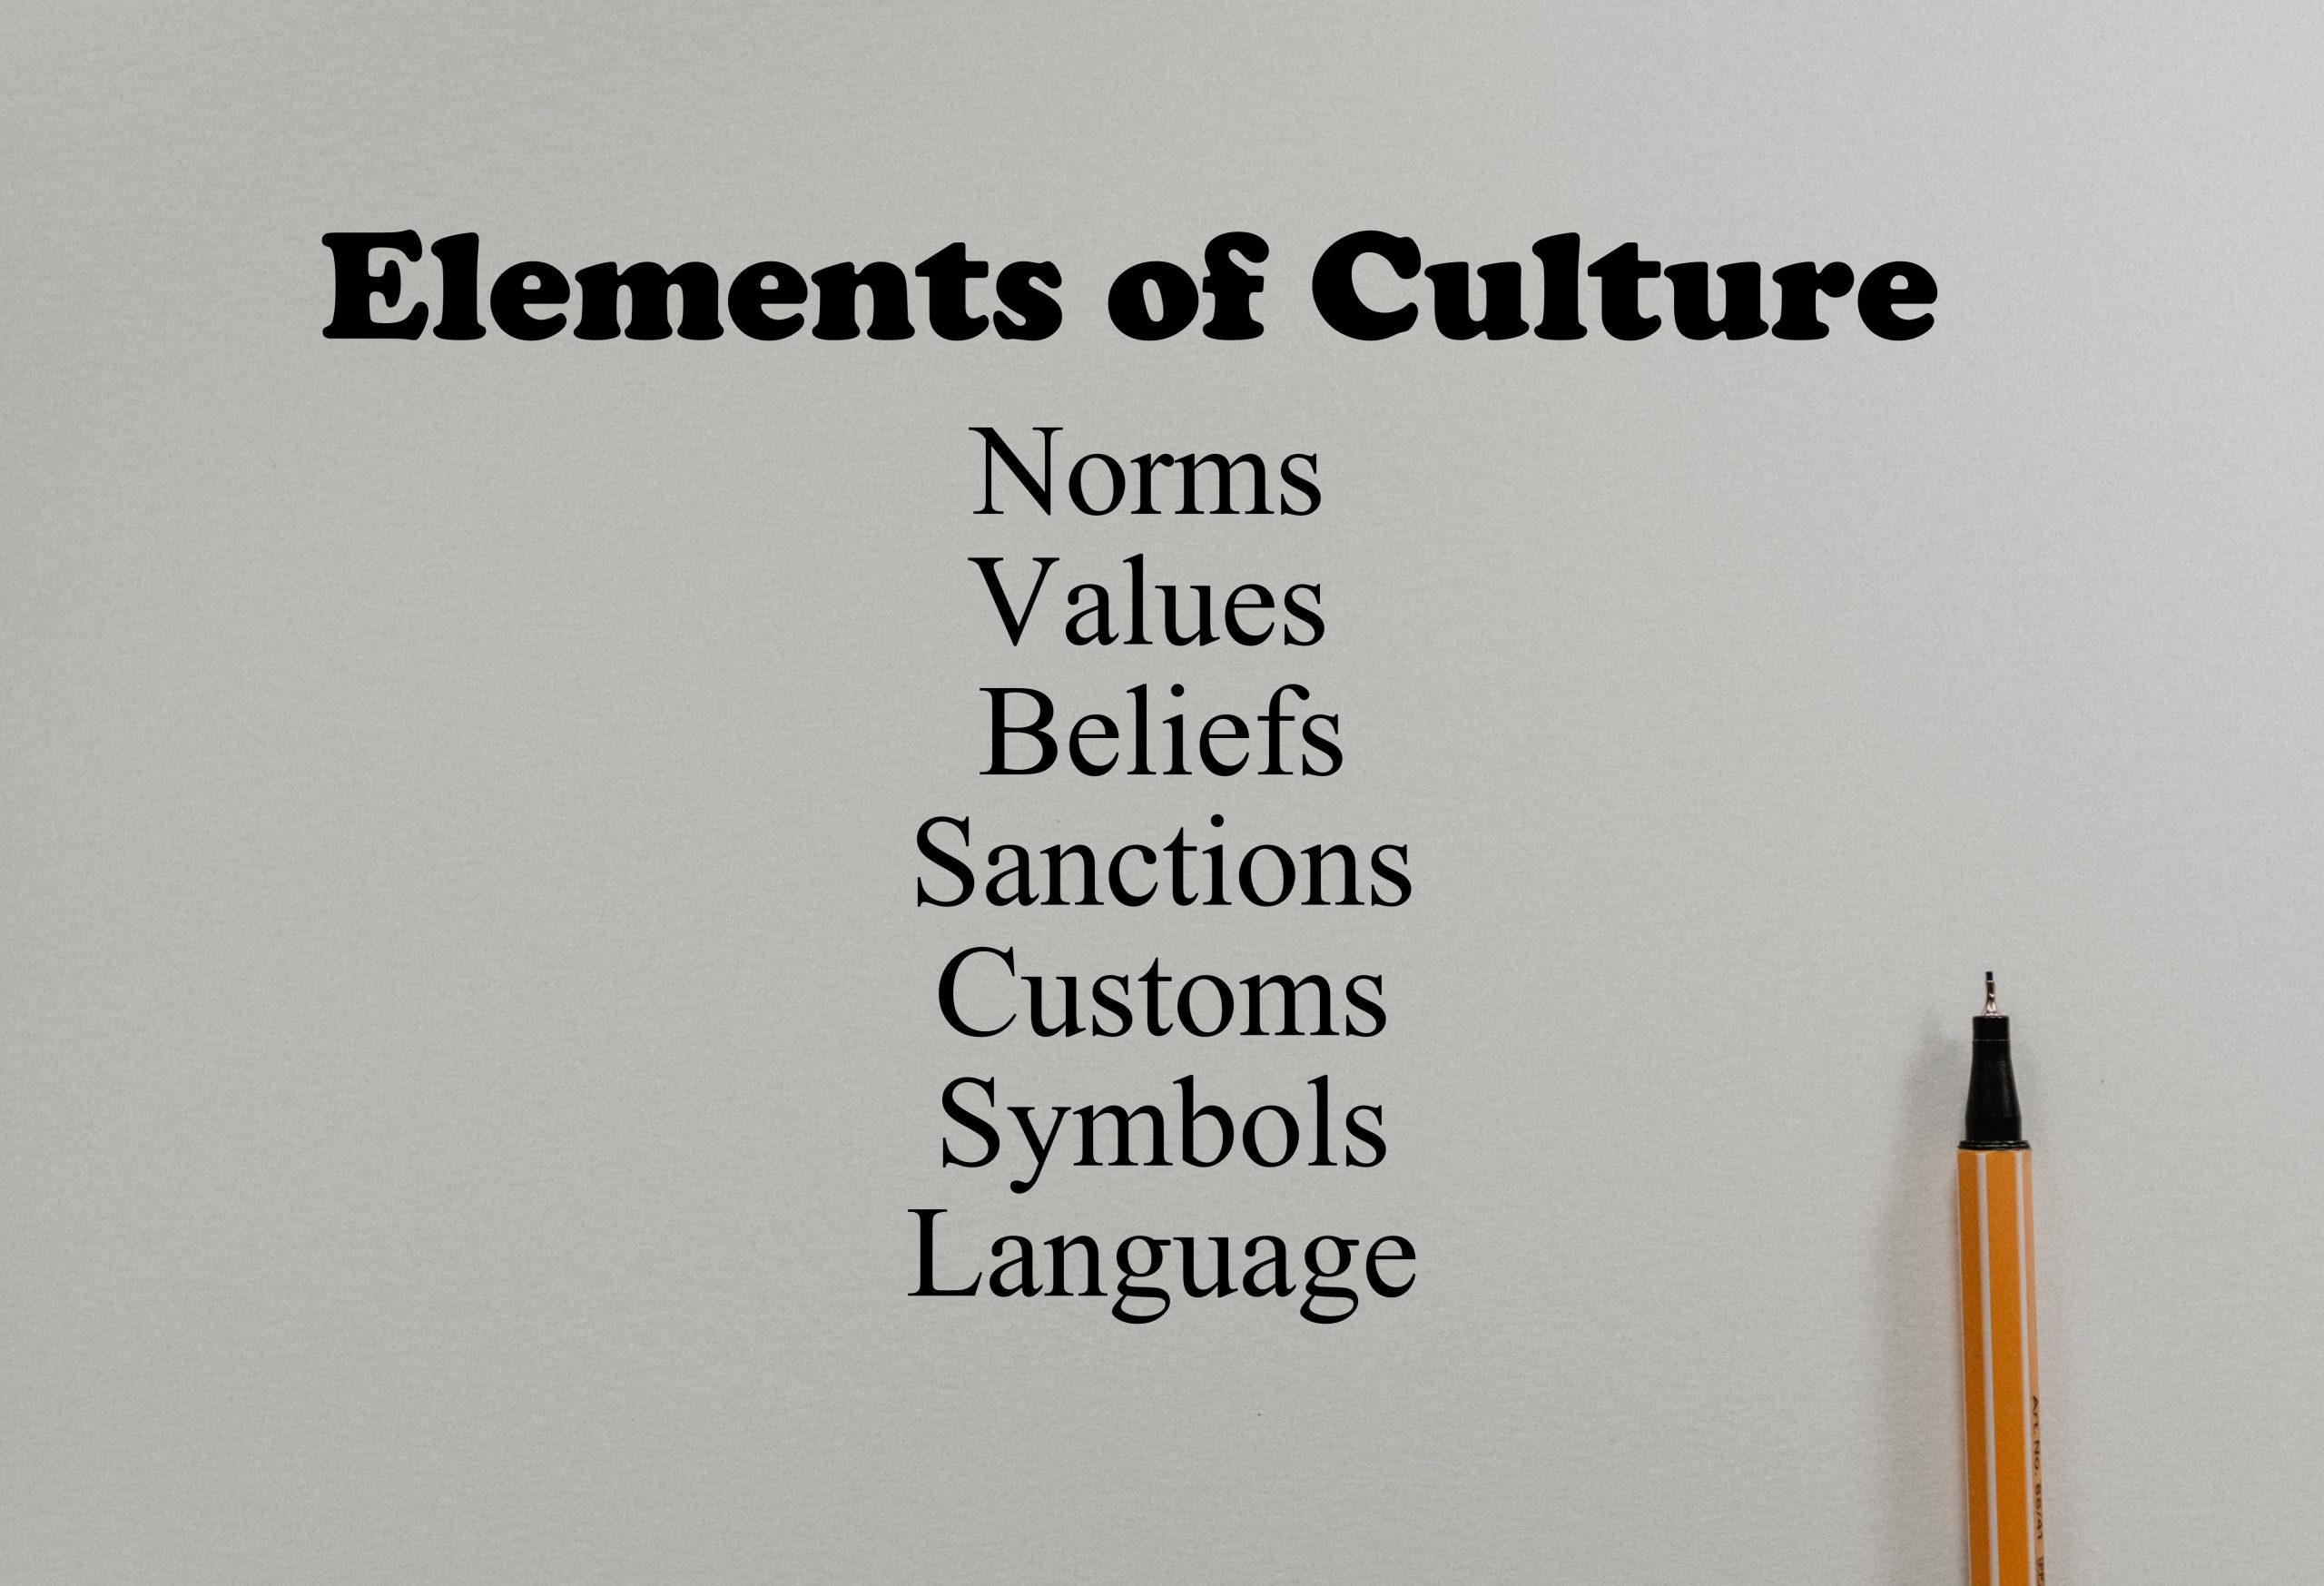 Elements of culture